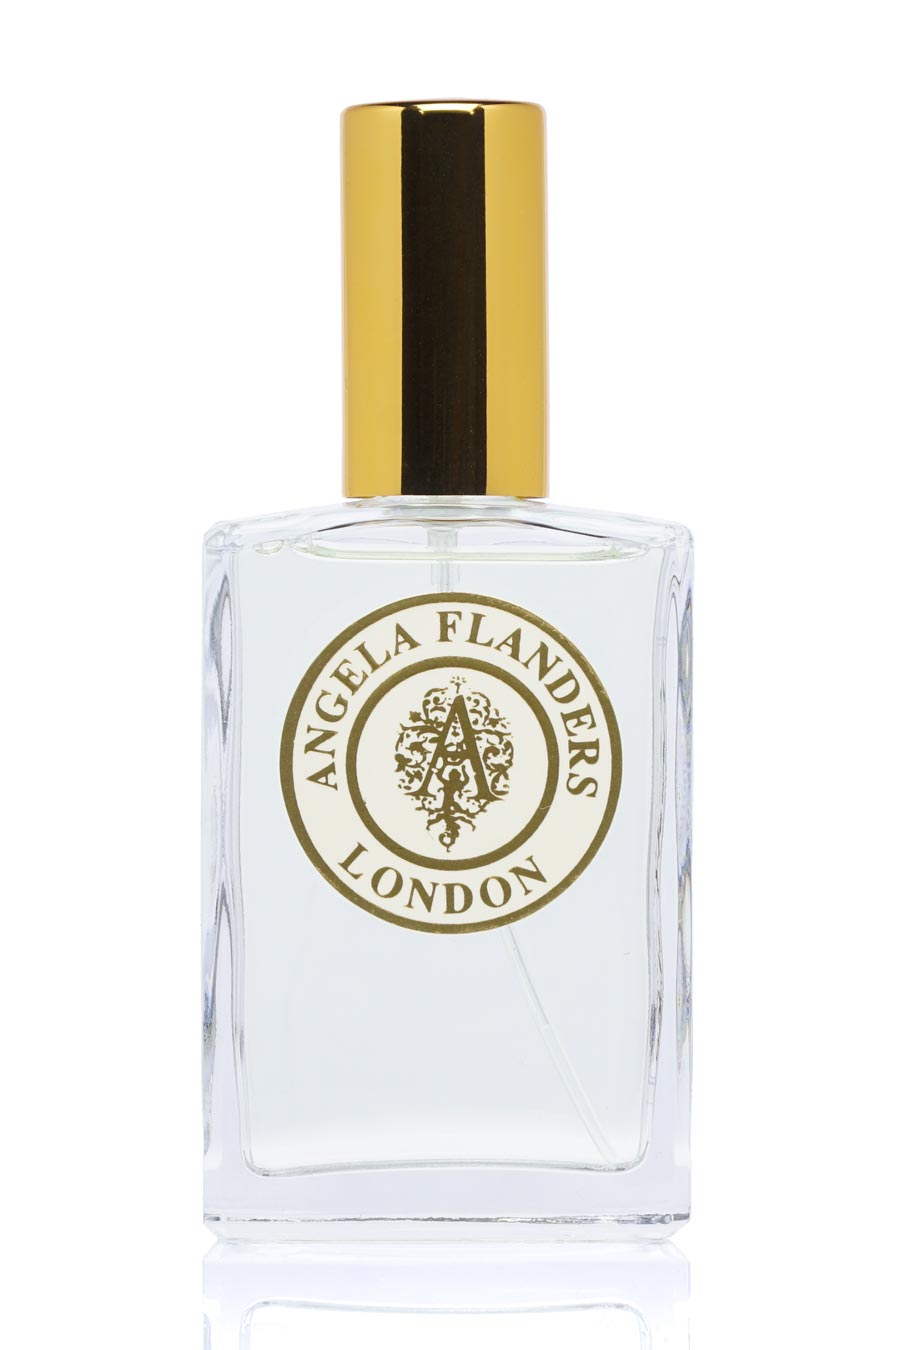 Angela Flanders Mandarin & Mint Eau de Parfum 50ml